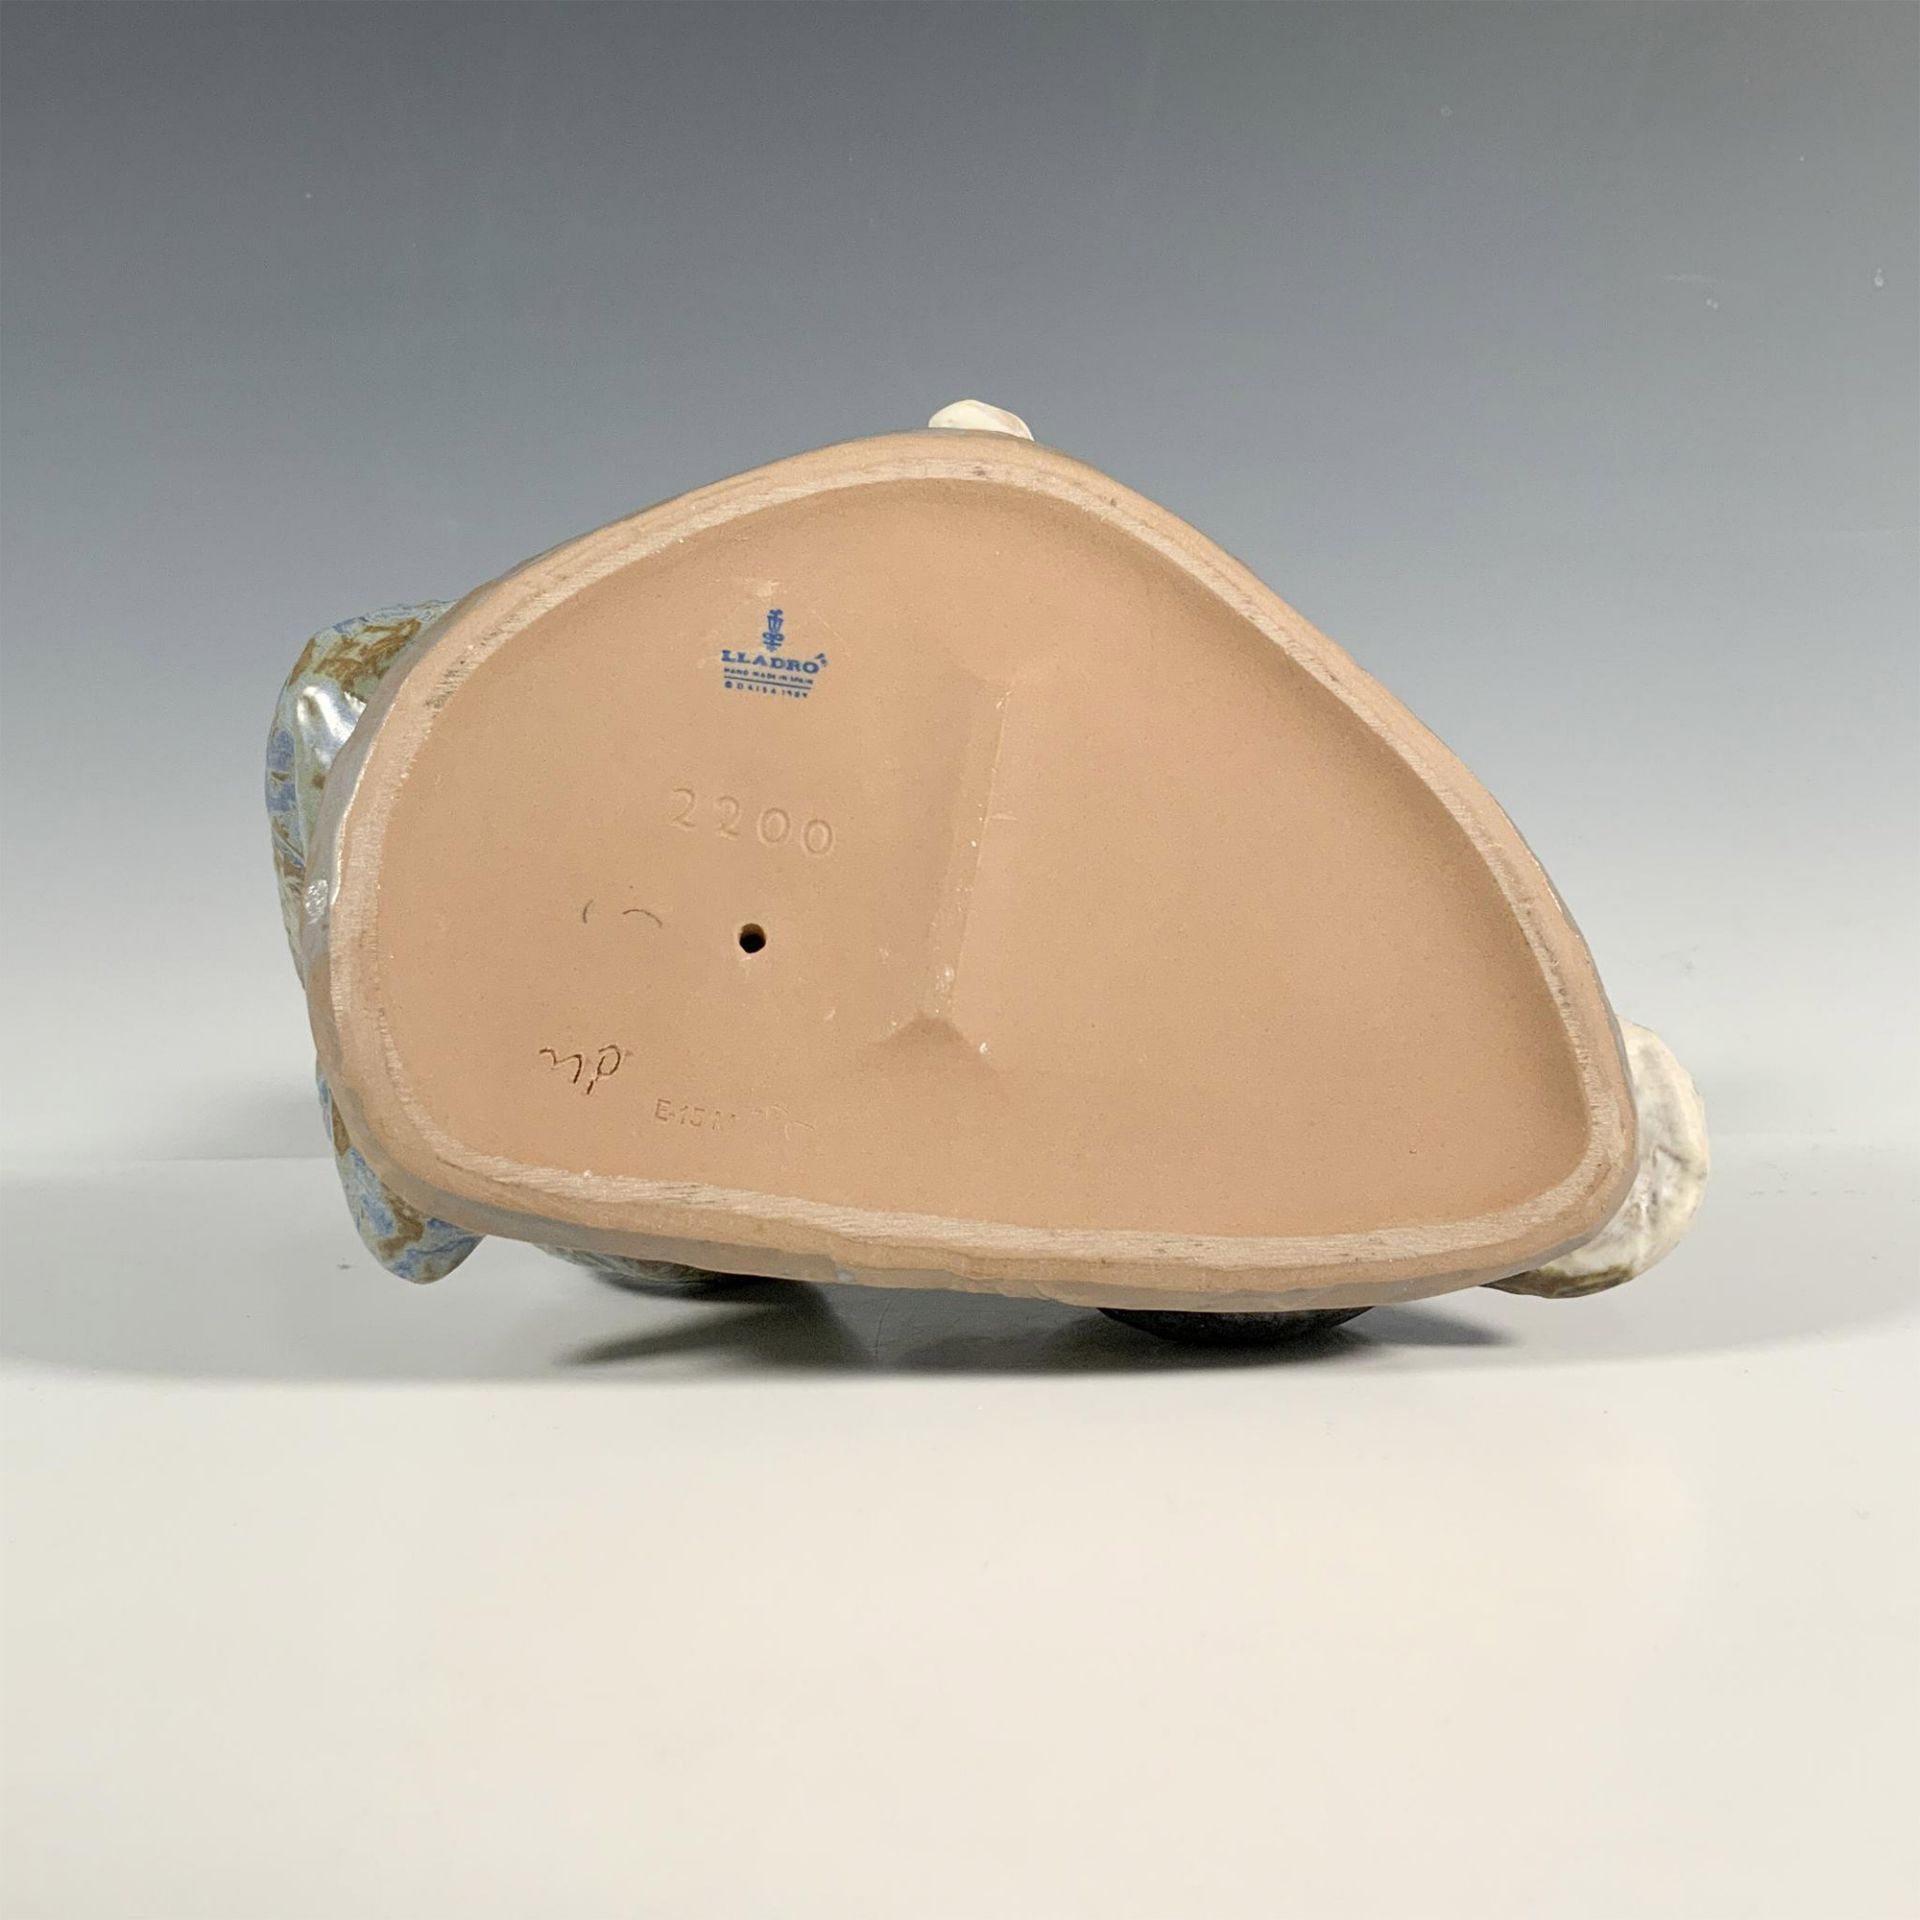 A Big Hug 1012200 - Lladro Porcelain Figurine - Image 3 of 4